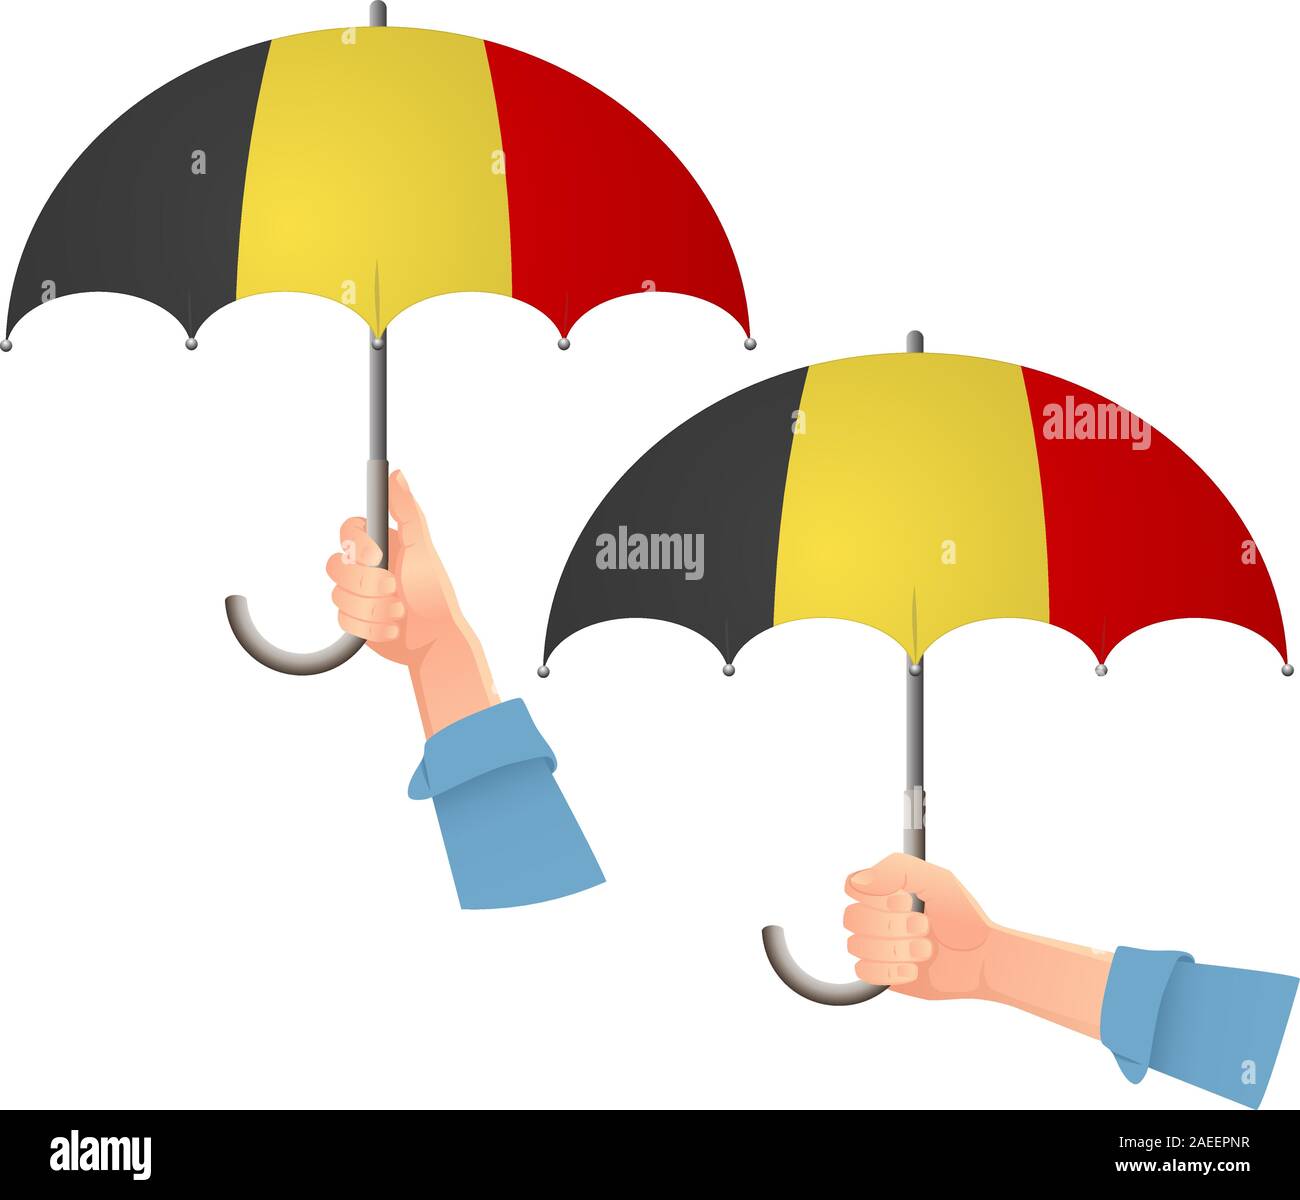 Belgium flag umbrella. Social security concept. National flag of Belgium vector illustration Stock Vector